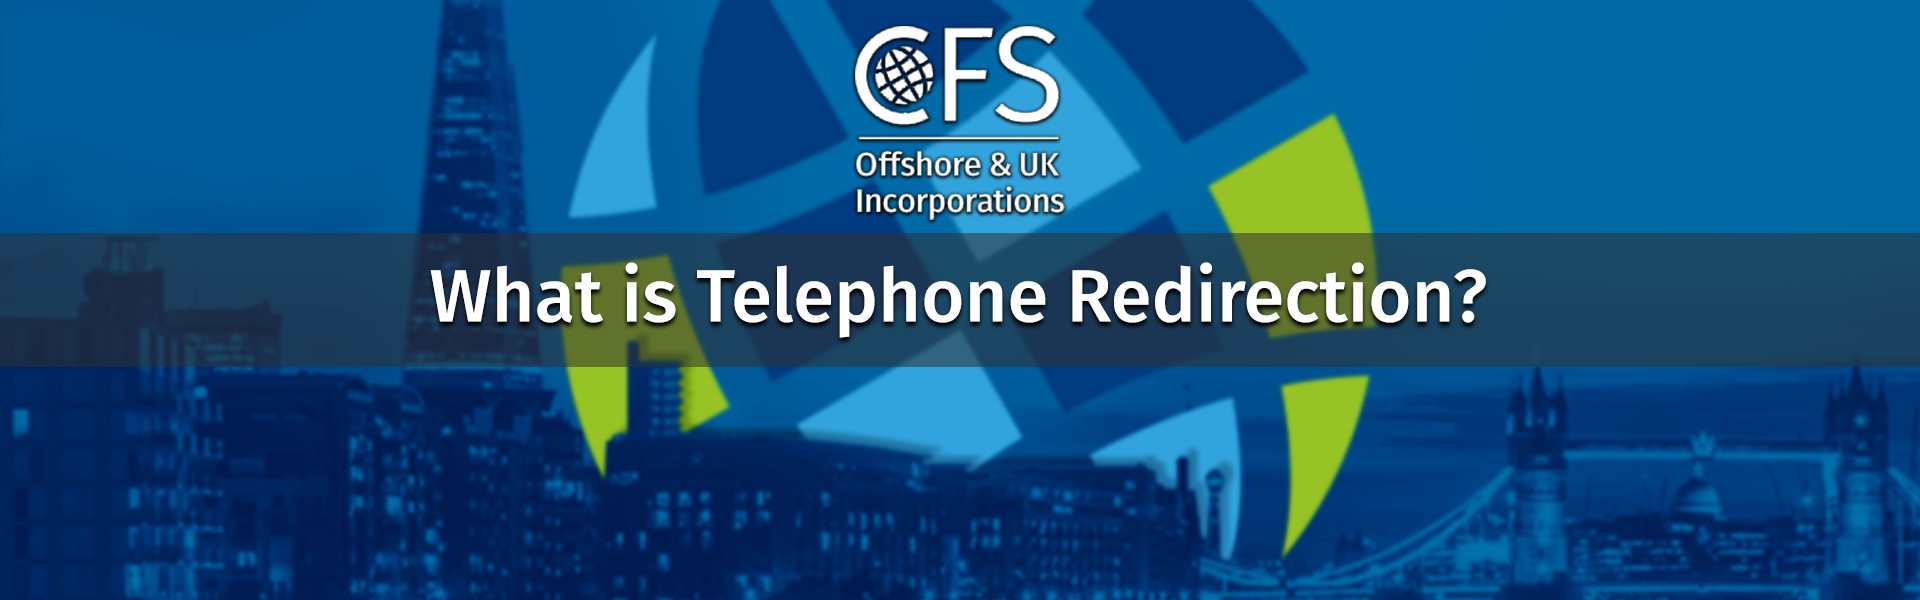 News Telephone Redirection